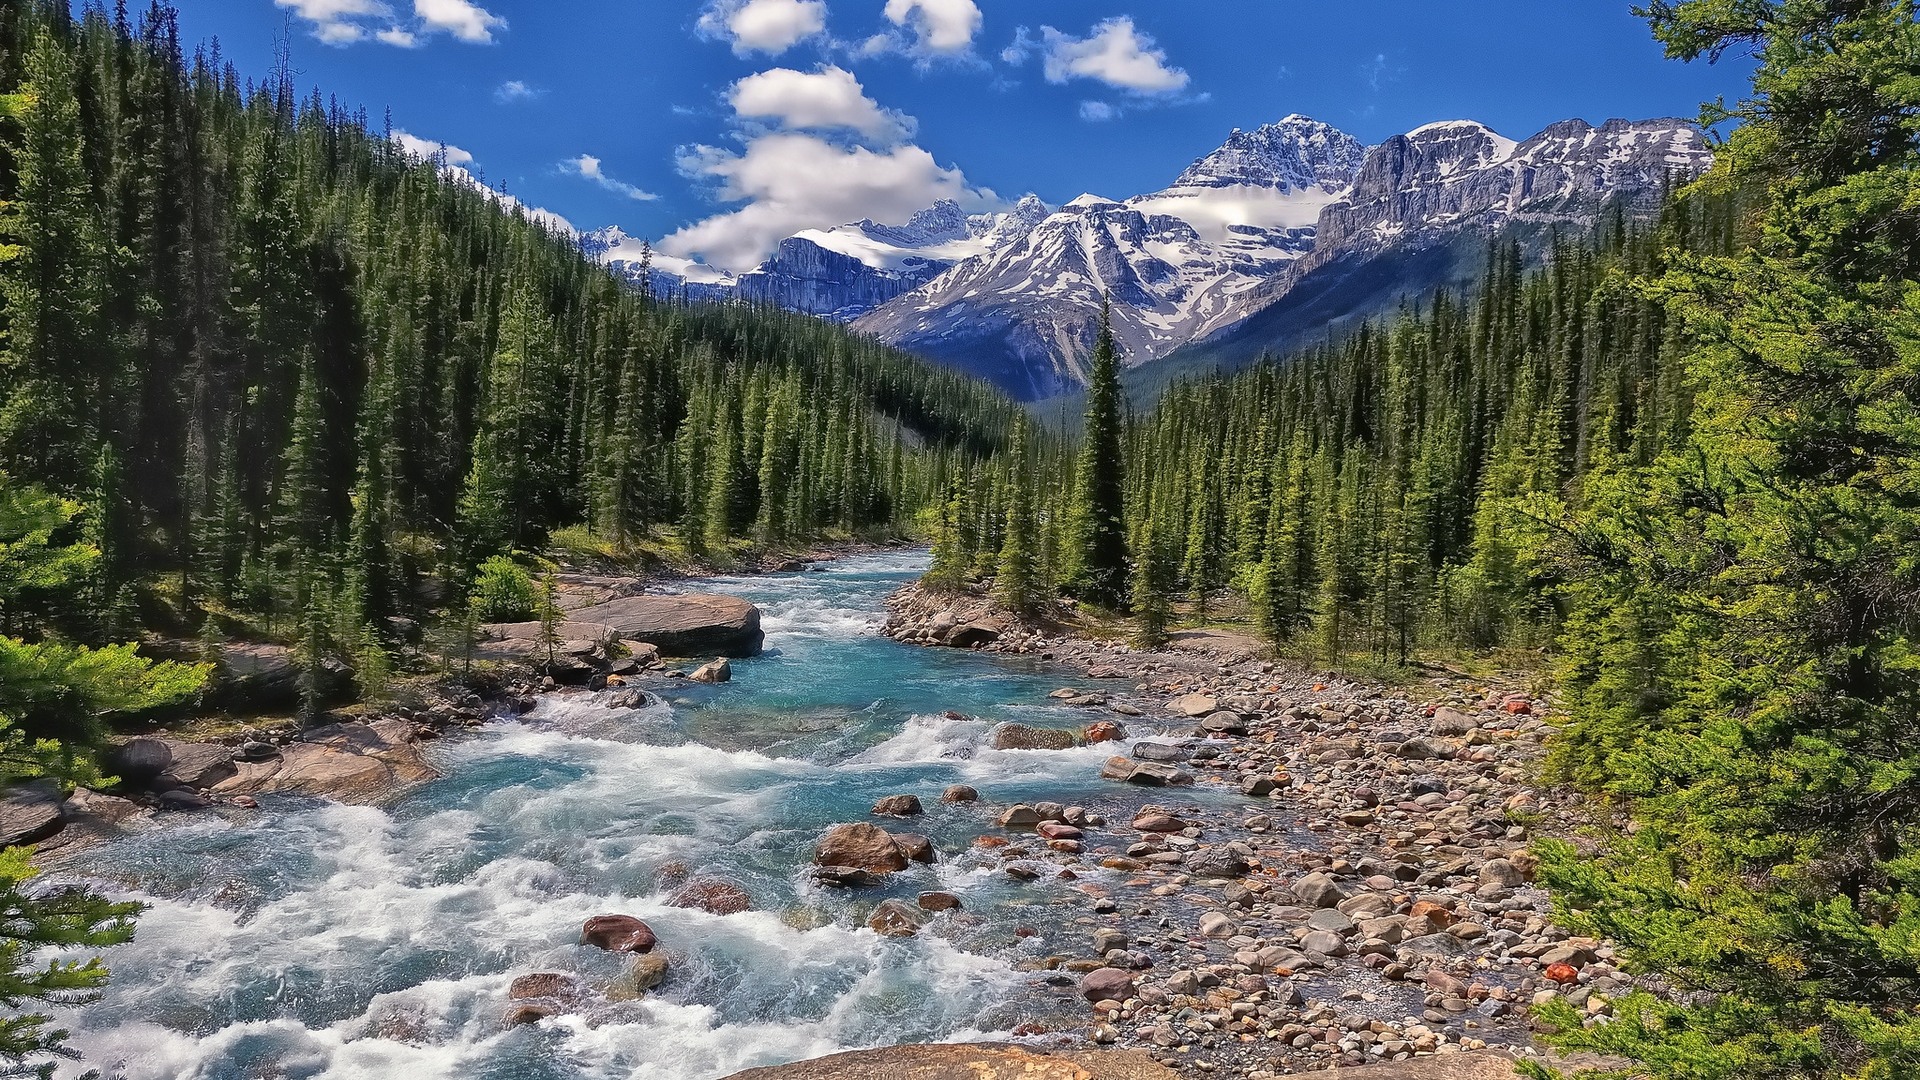 685416 descargar imagen tierra/naturaleza, rio, alberta, parque nacional banff, banff, canadá, bosque, río mistaya, montaña: fondos de pantalla y protectores de pantalla gratis